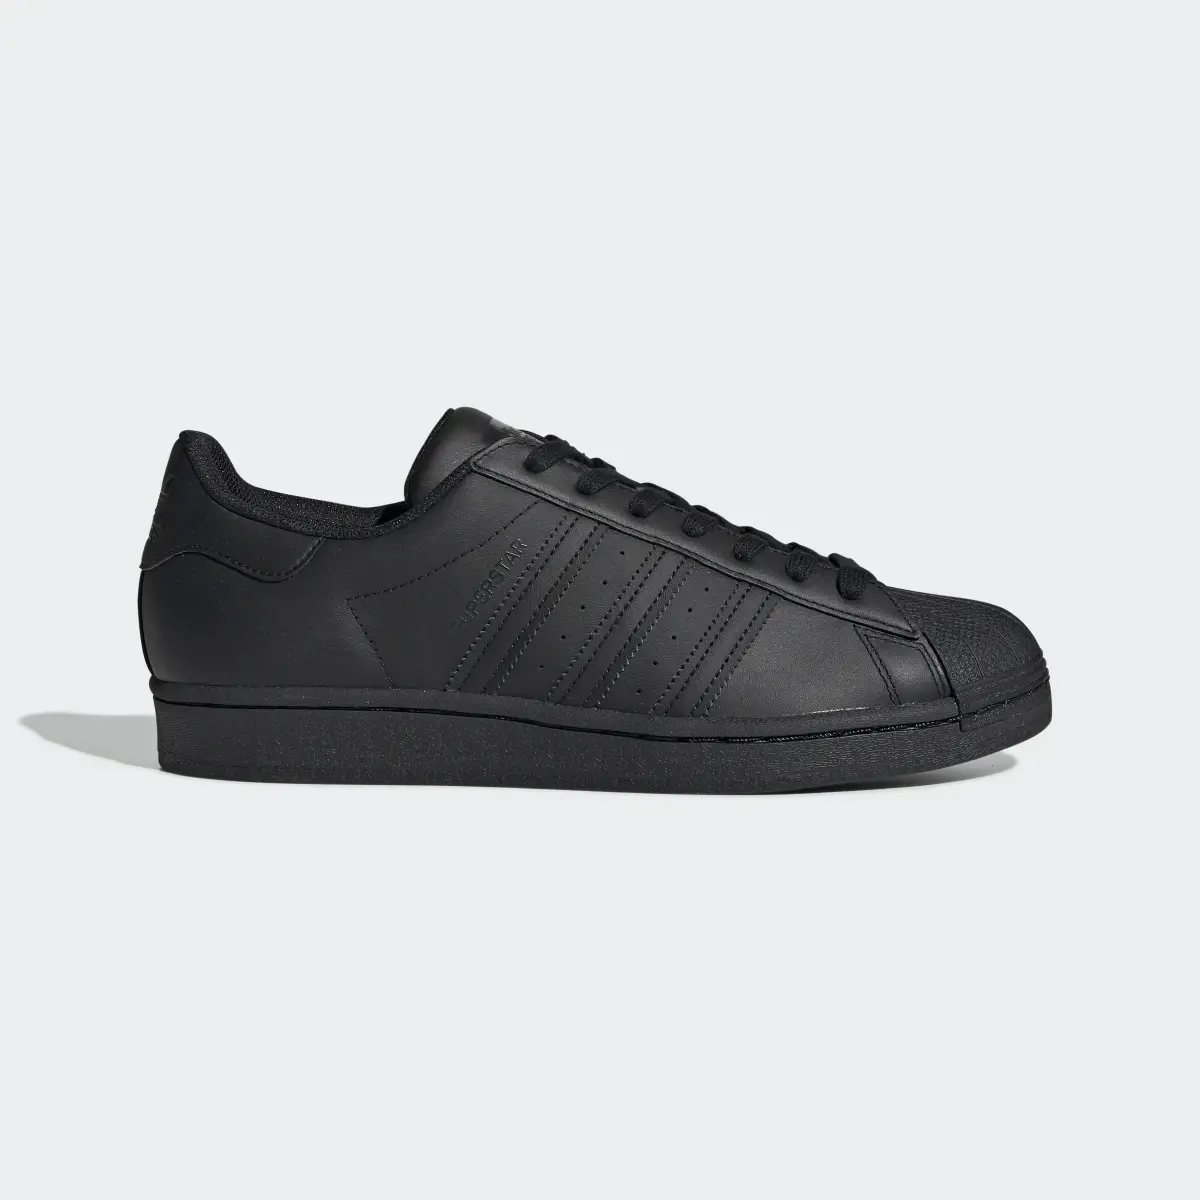 Adidas Superstar Shoes. 2